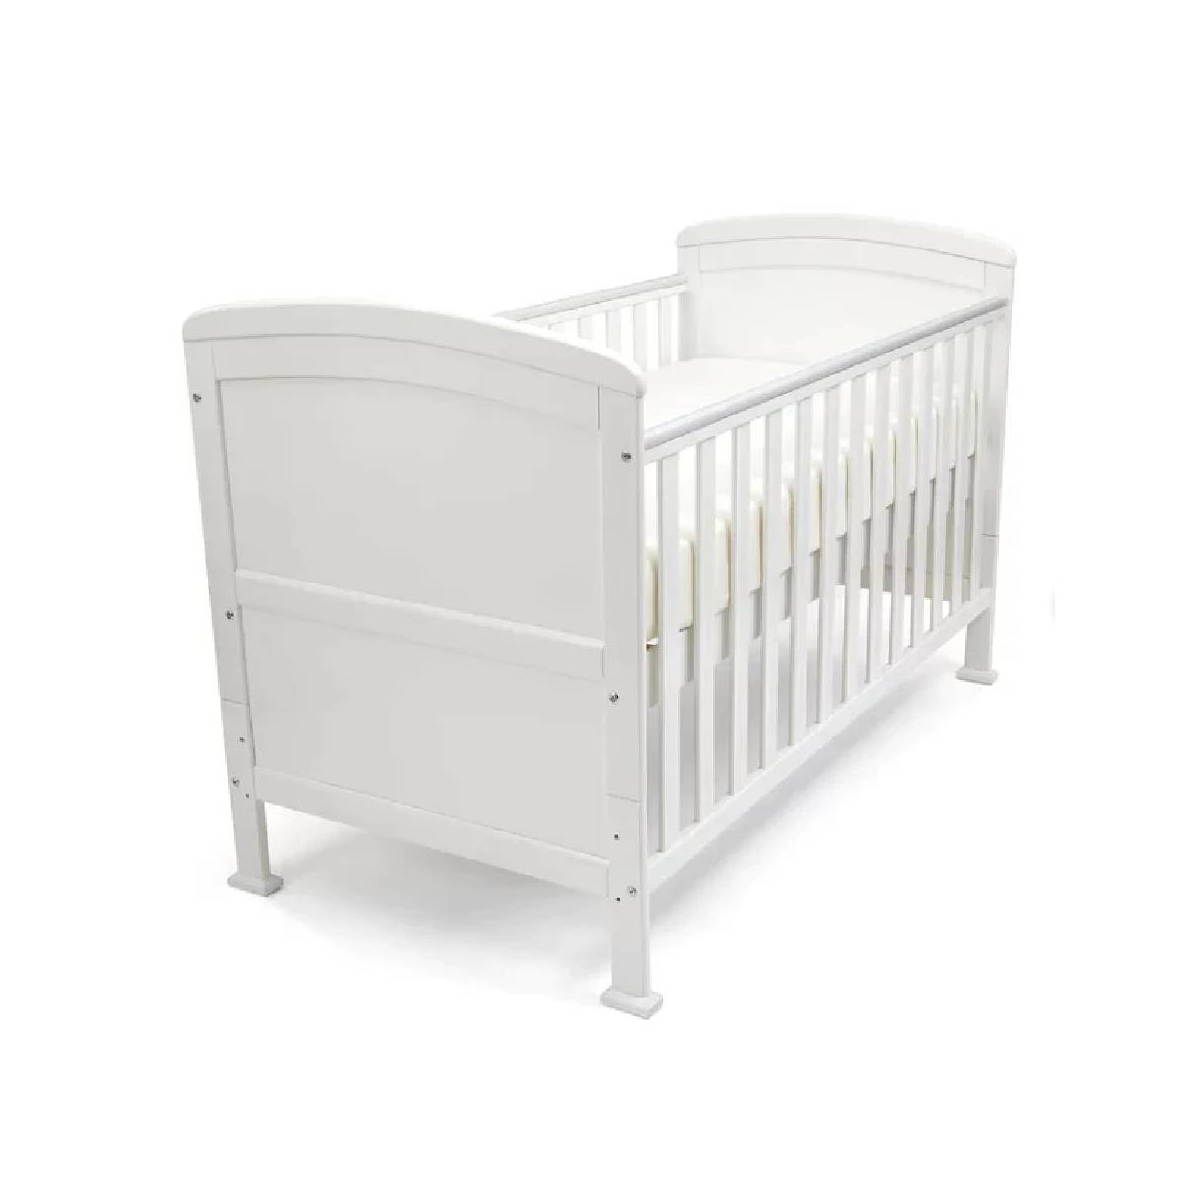 Aya Penelope Cot Bed/Toddler Bed (140 x 70cm)